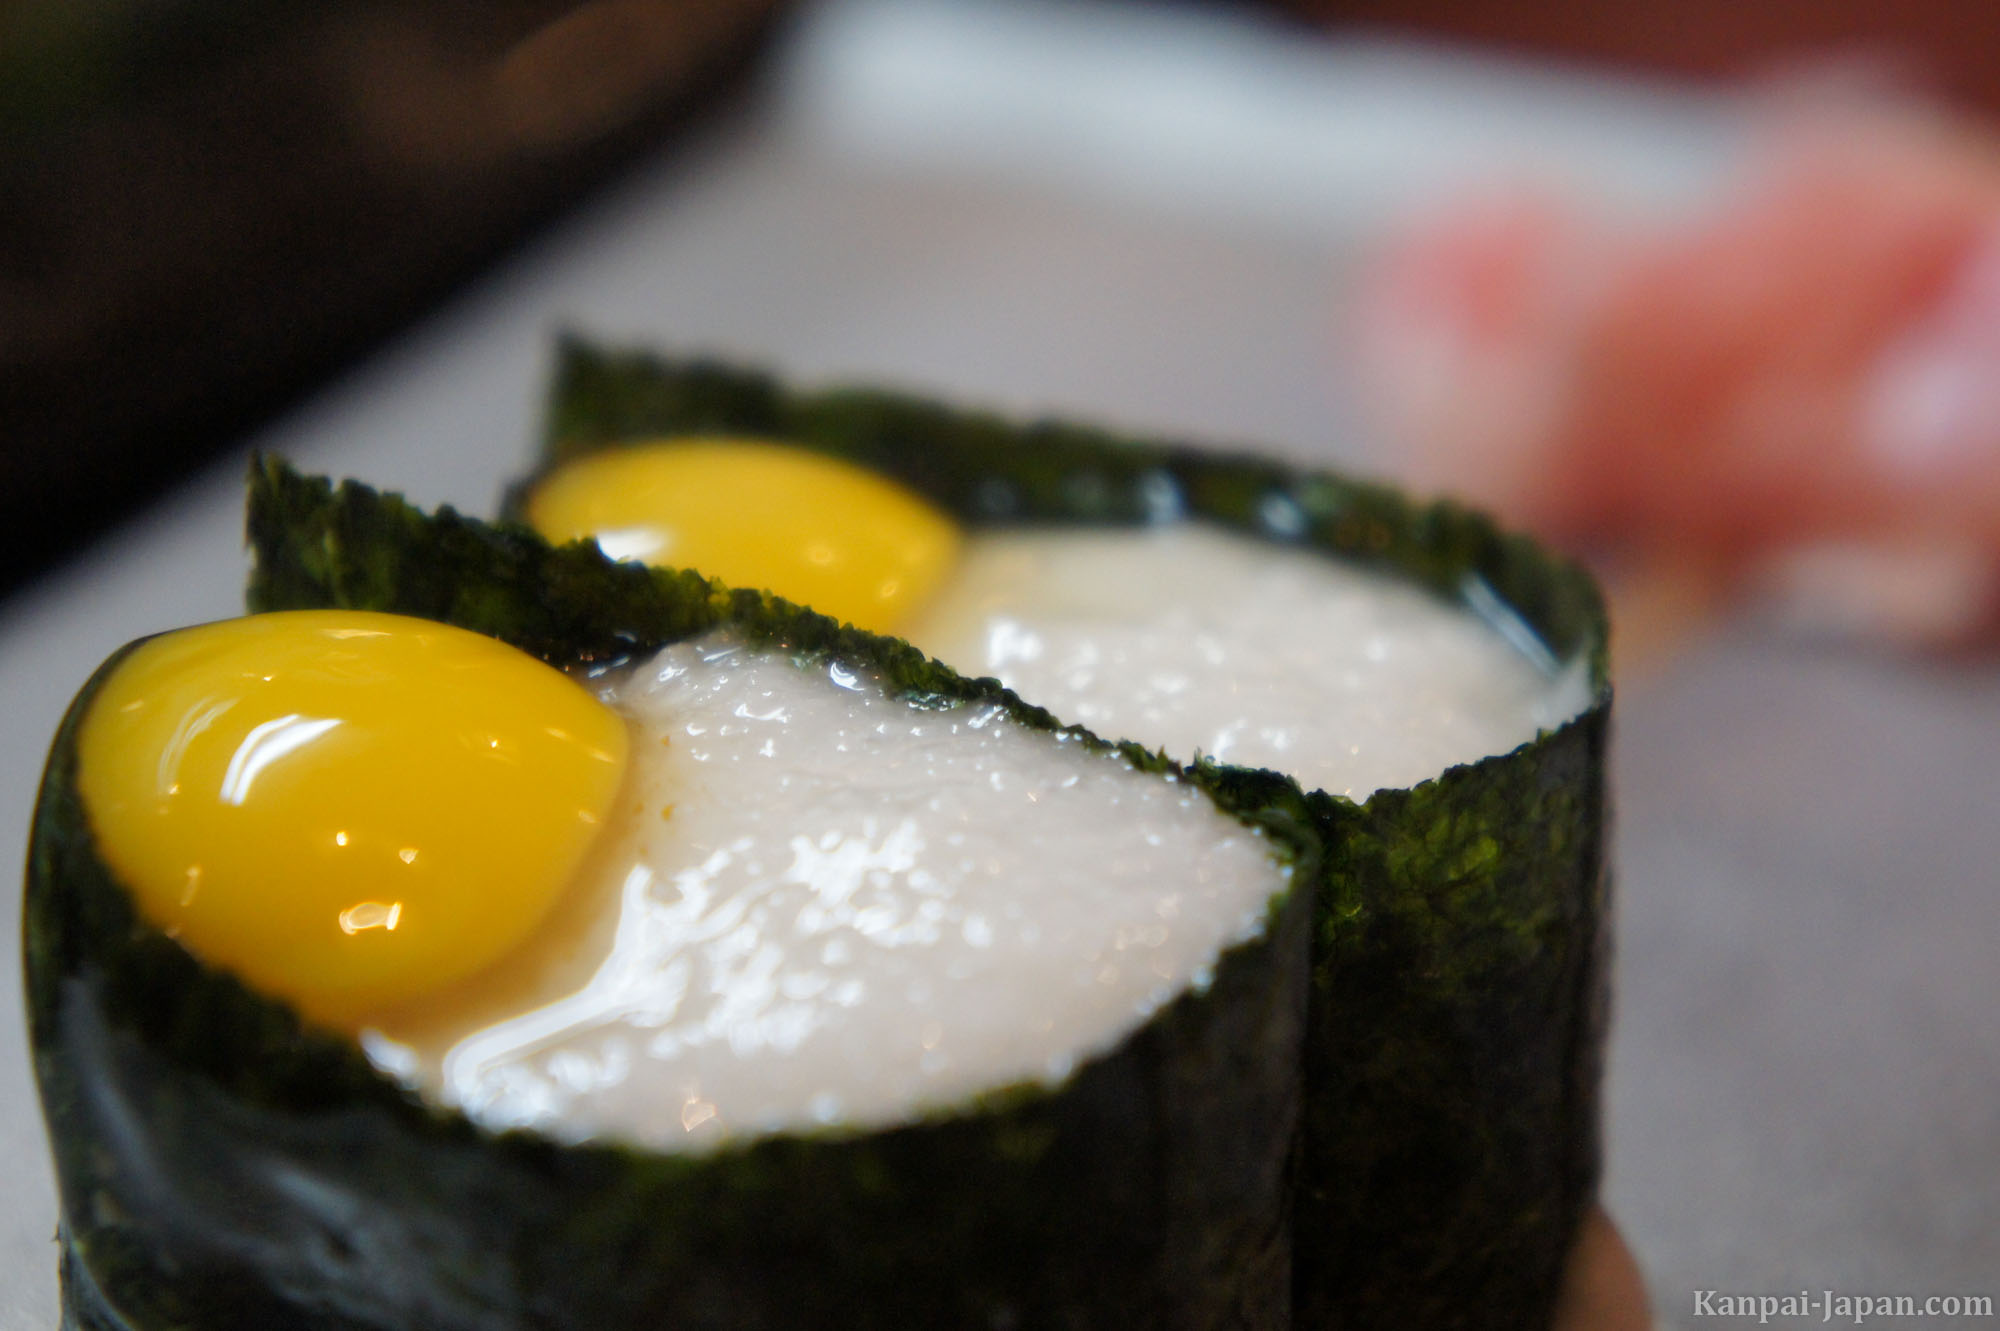 Ichiba Zushi - One of the best sushi restaurants in Japan